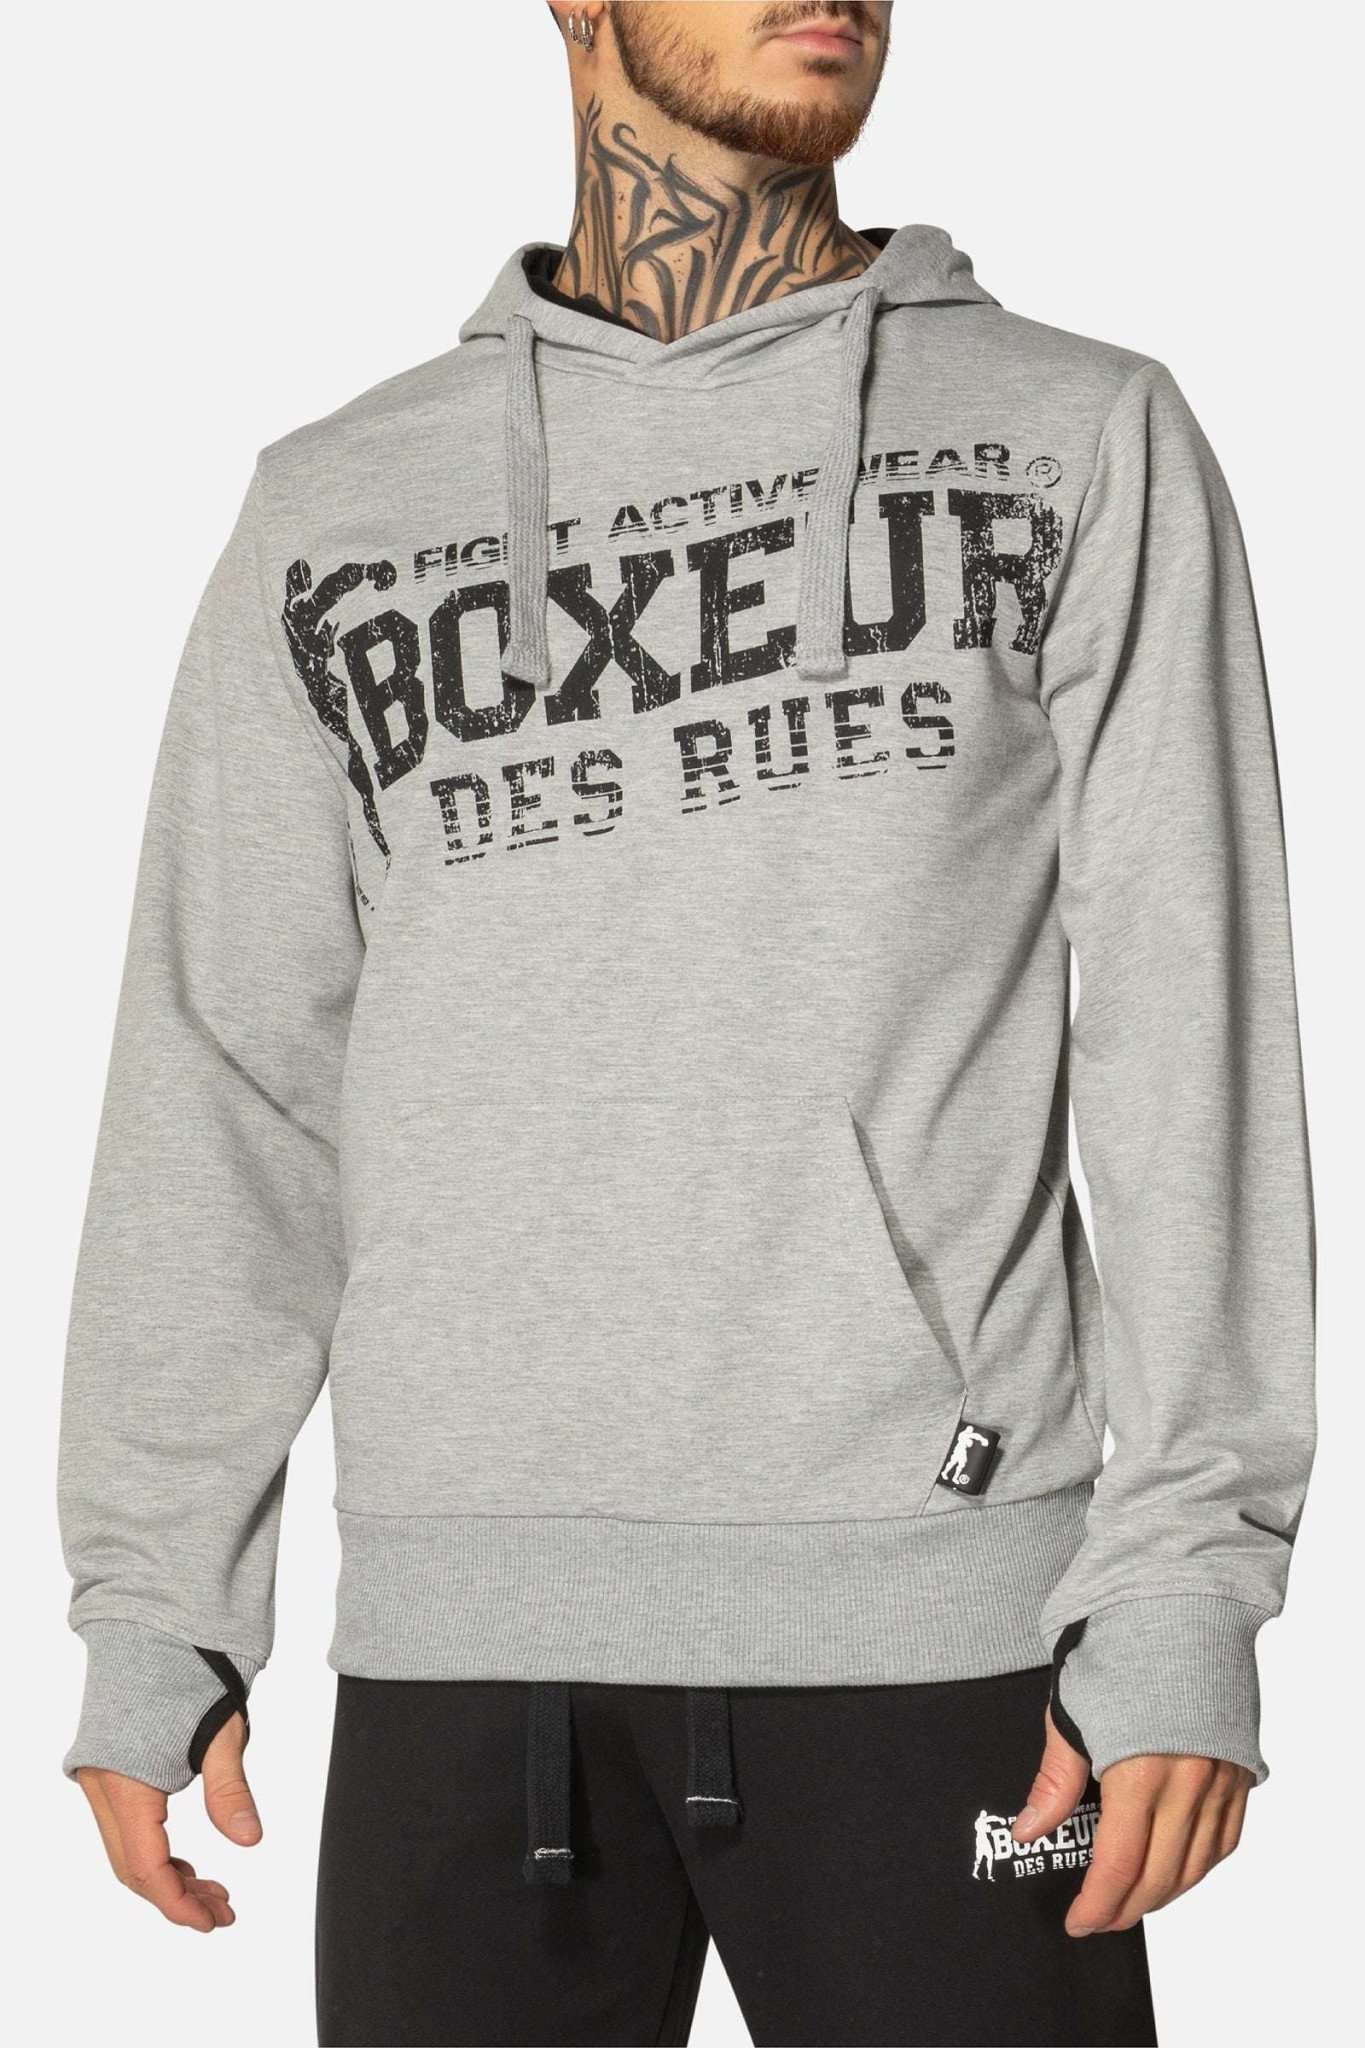 Hooded Sweatshirt Big Logo in Grey Melange Kapuzenpullover Boxeur des Rues   